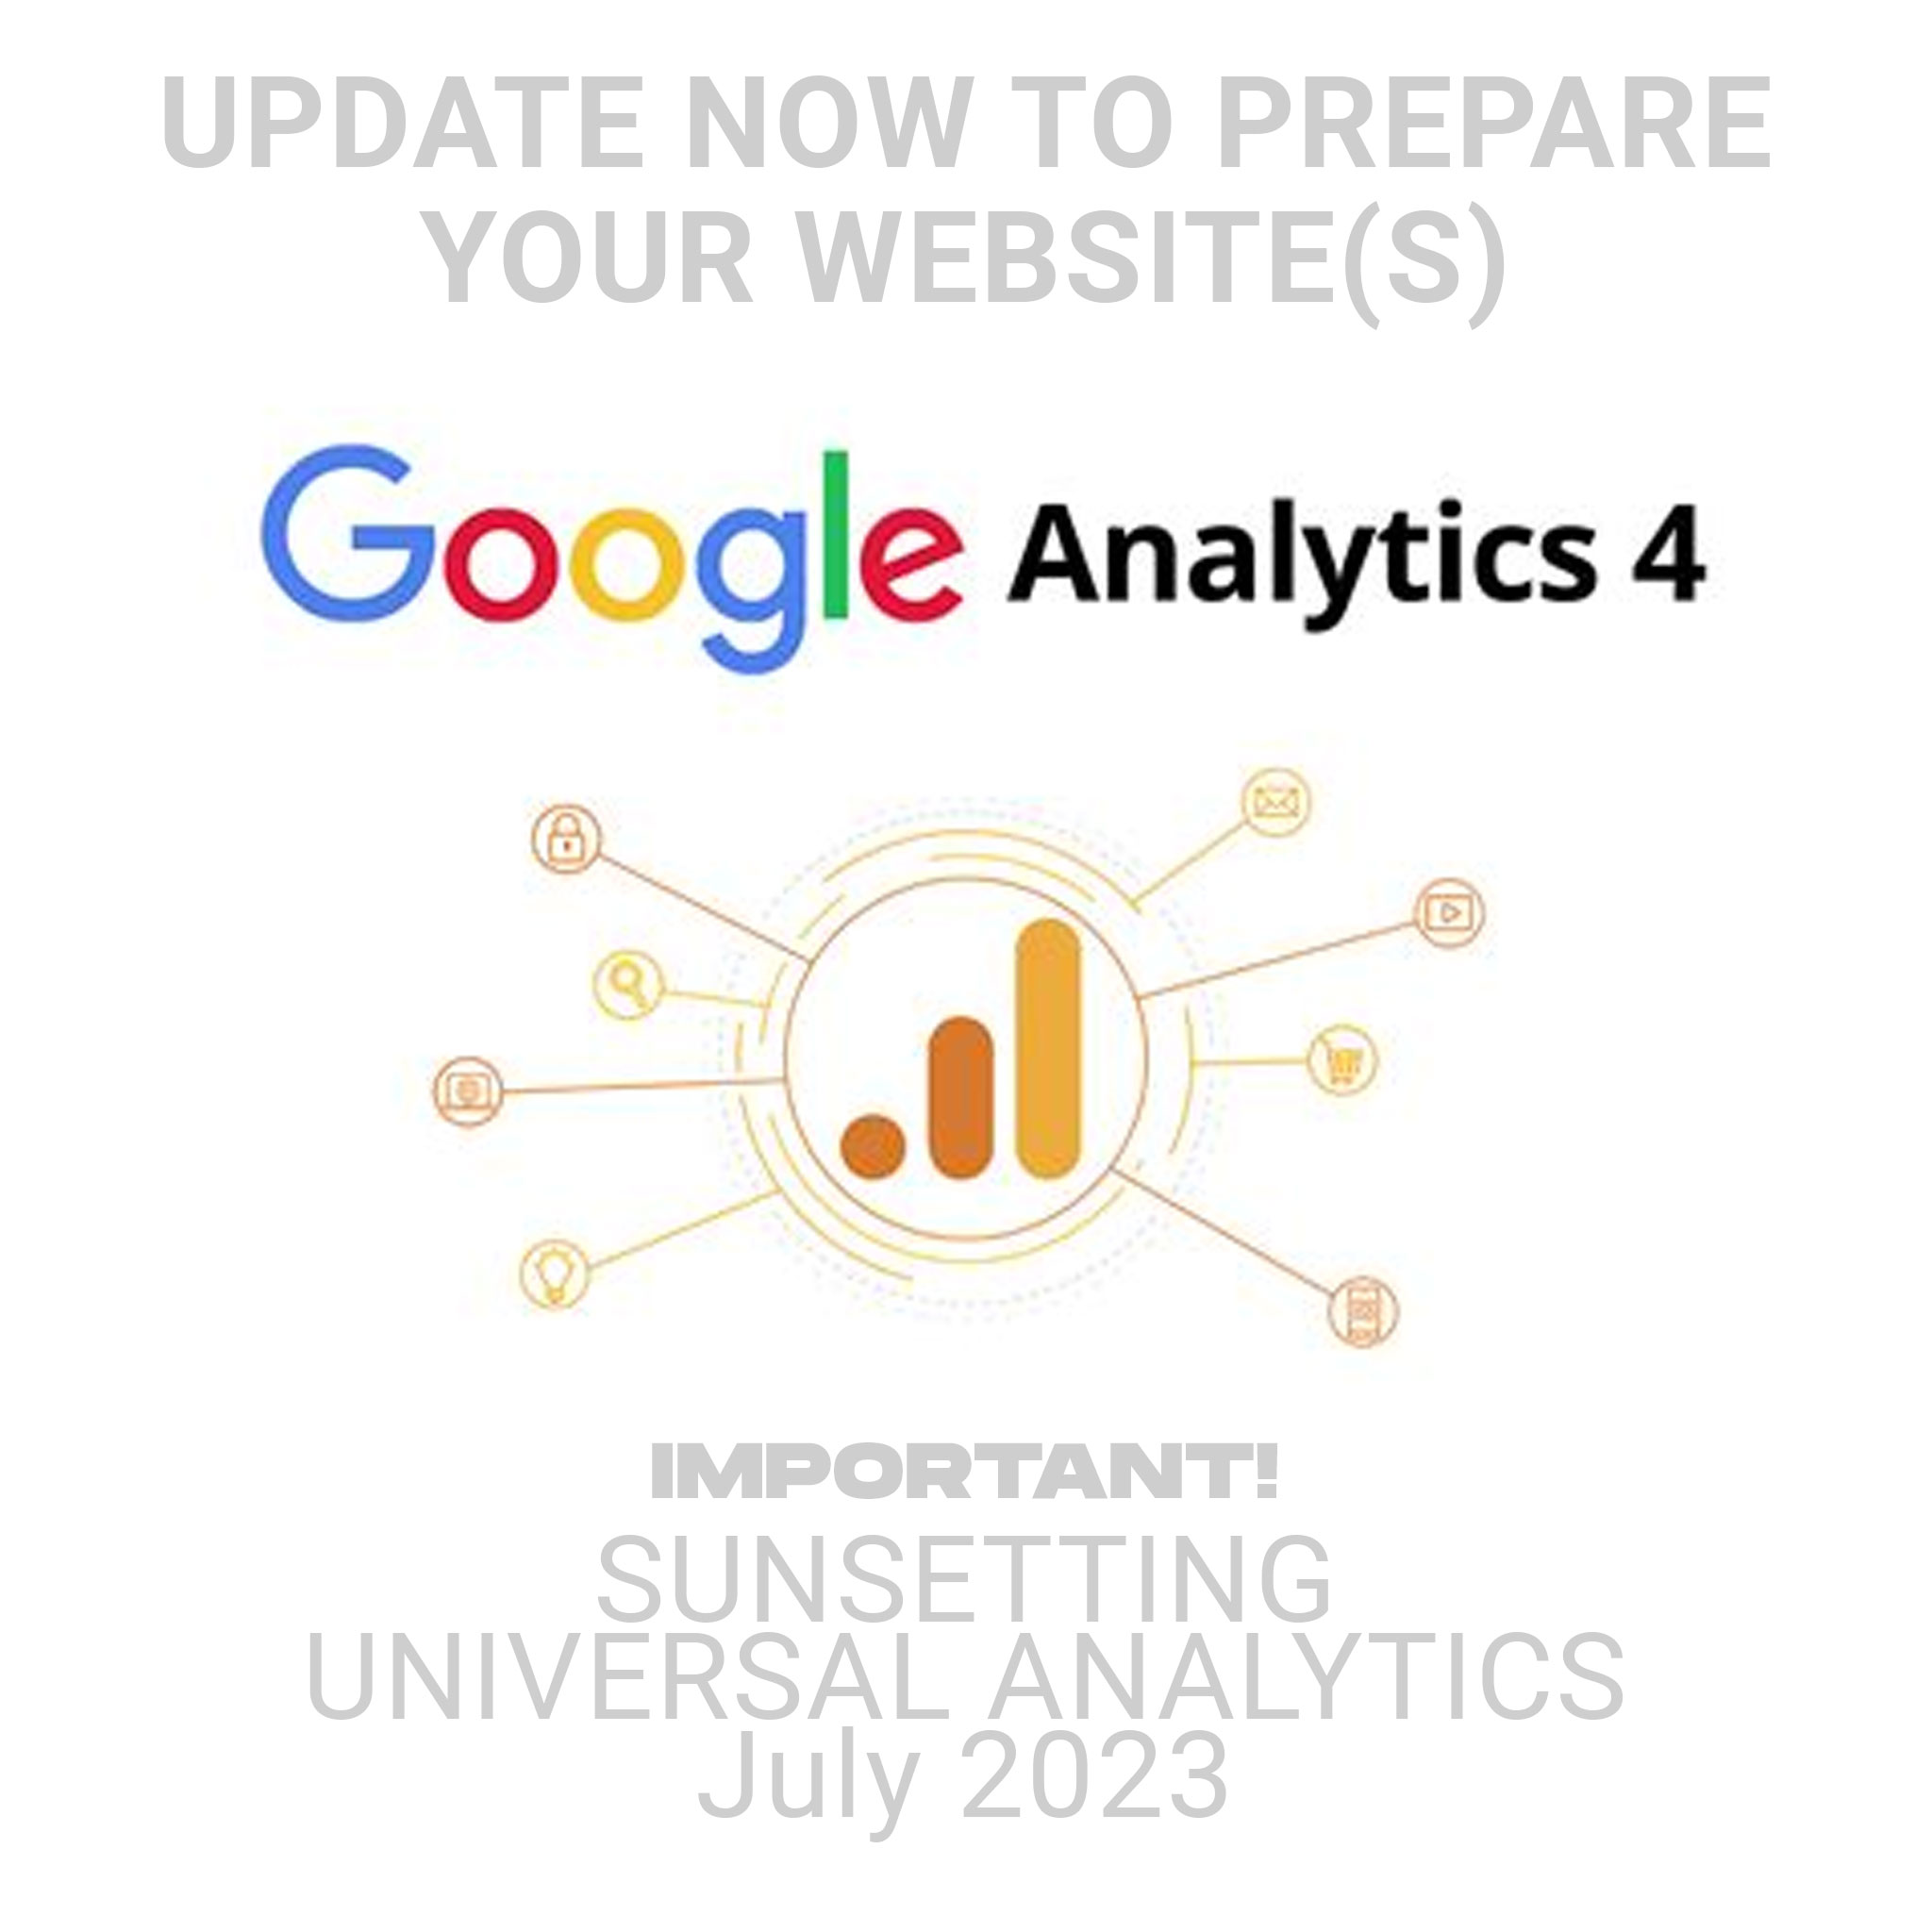 Google Analytics 4: What We Need to Know